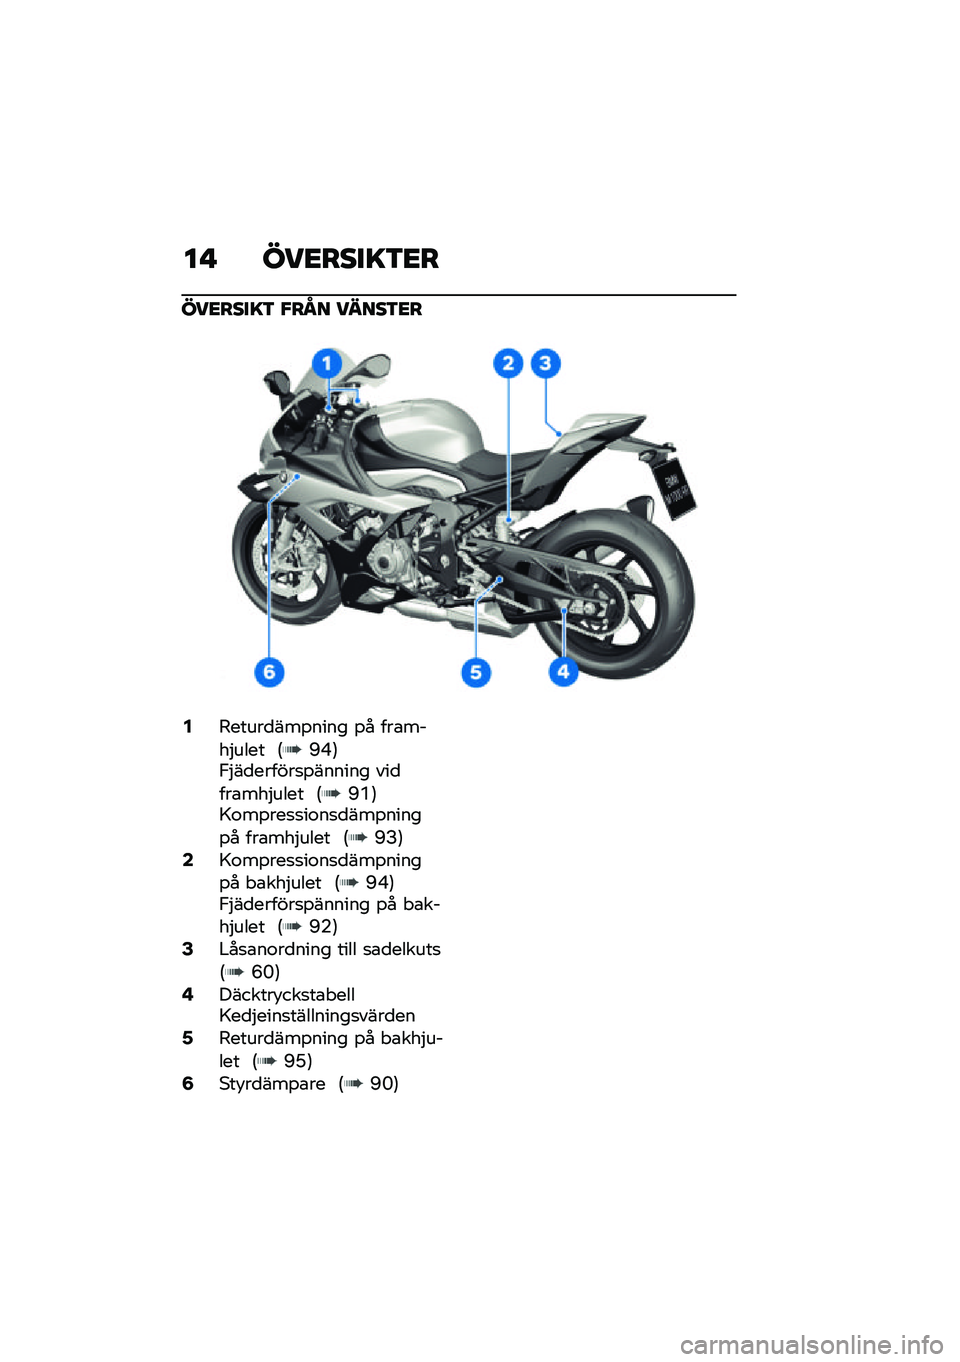 BMW MOTORRAD M 1000 RR 2021  Instruktionsbok (in Swedish) ��  ���<����=�3�<�
���<����=�3 �"��M� �����3�<�
�2�A�����
���%���� �%� ���\b����$���� �6�B�D�7�.�$��
������
�%������ ���
���\b���$���� �6�B